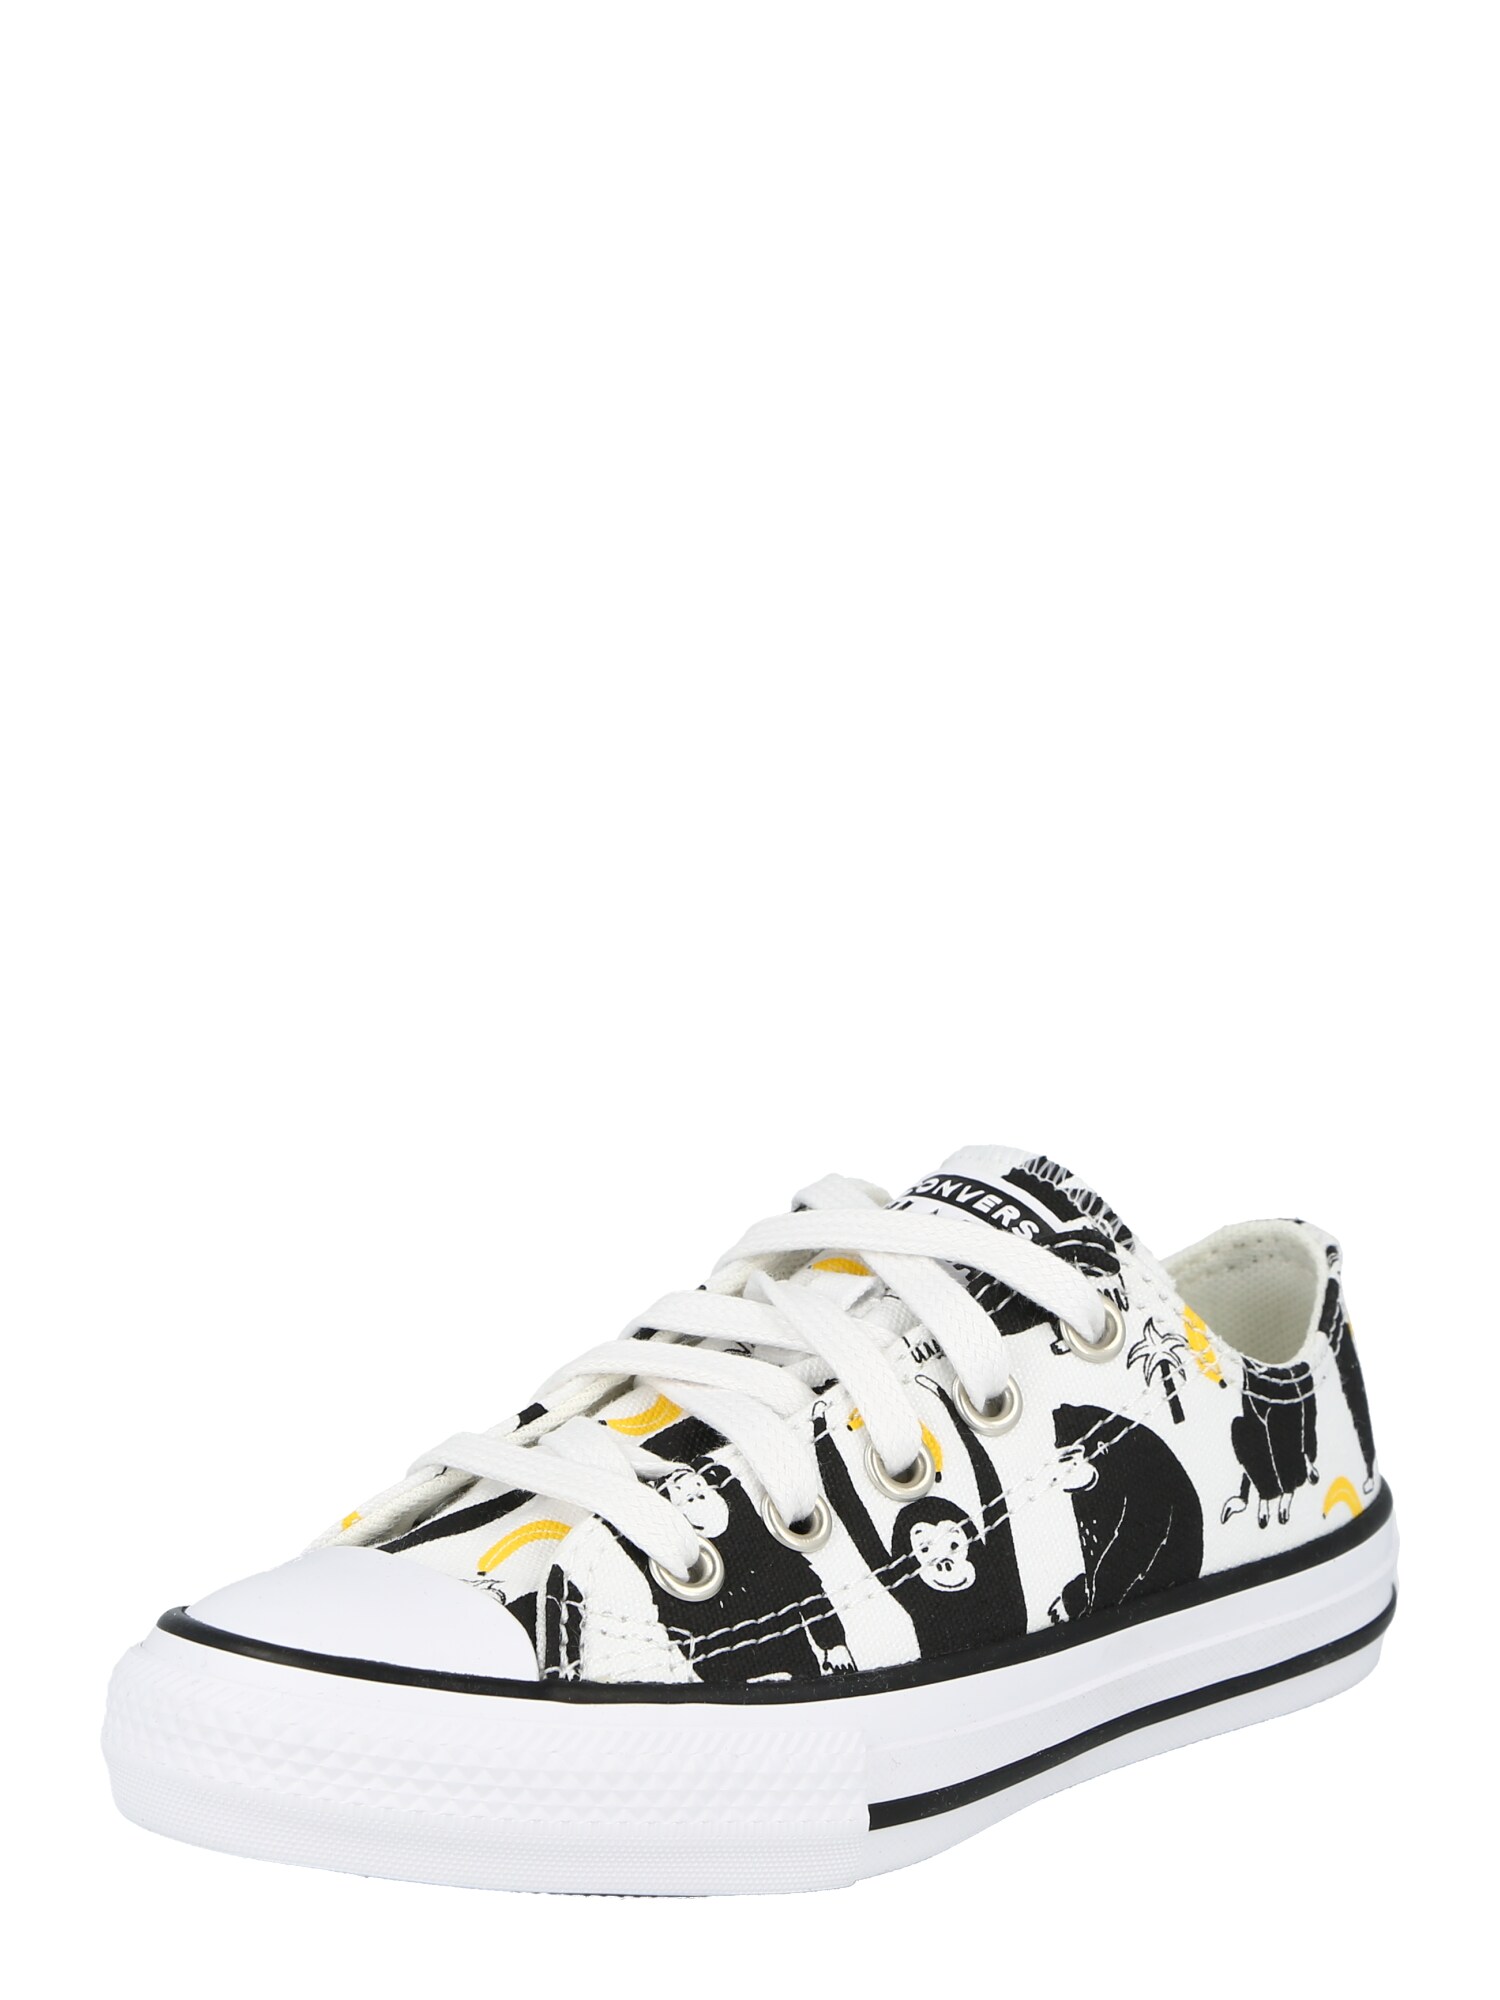 Converse CONVERSE Sneaker 'Chuck Taylor' gelb / schwarz / weiß